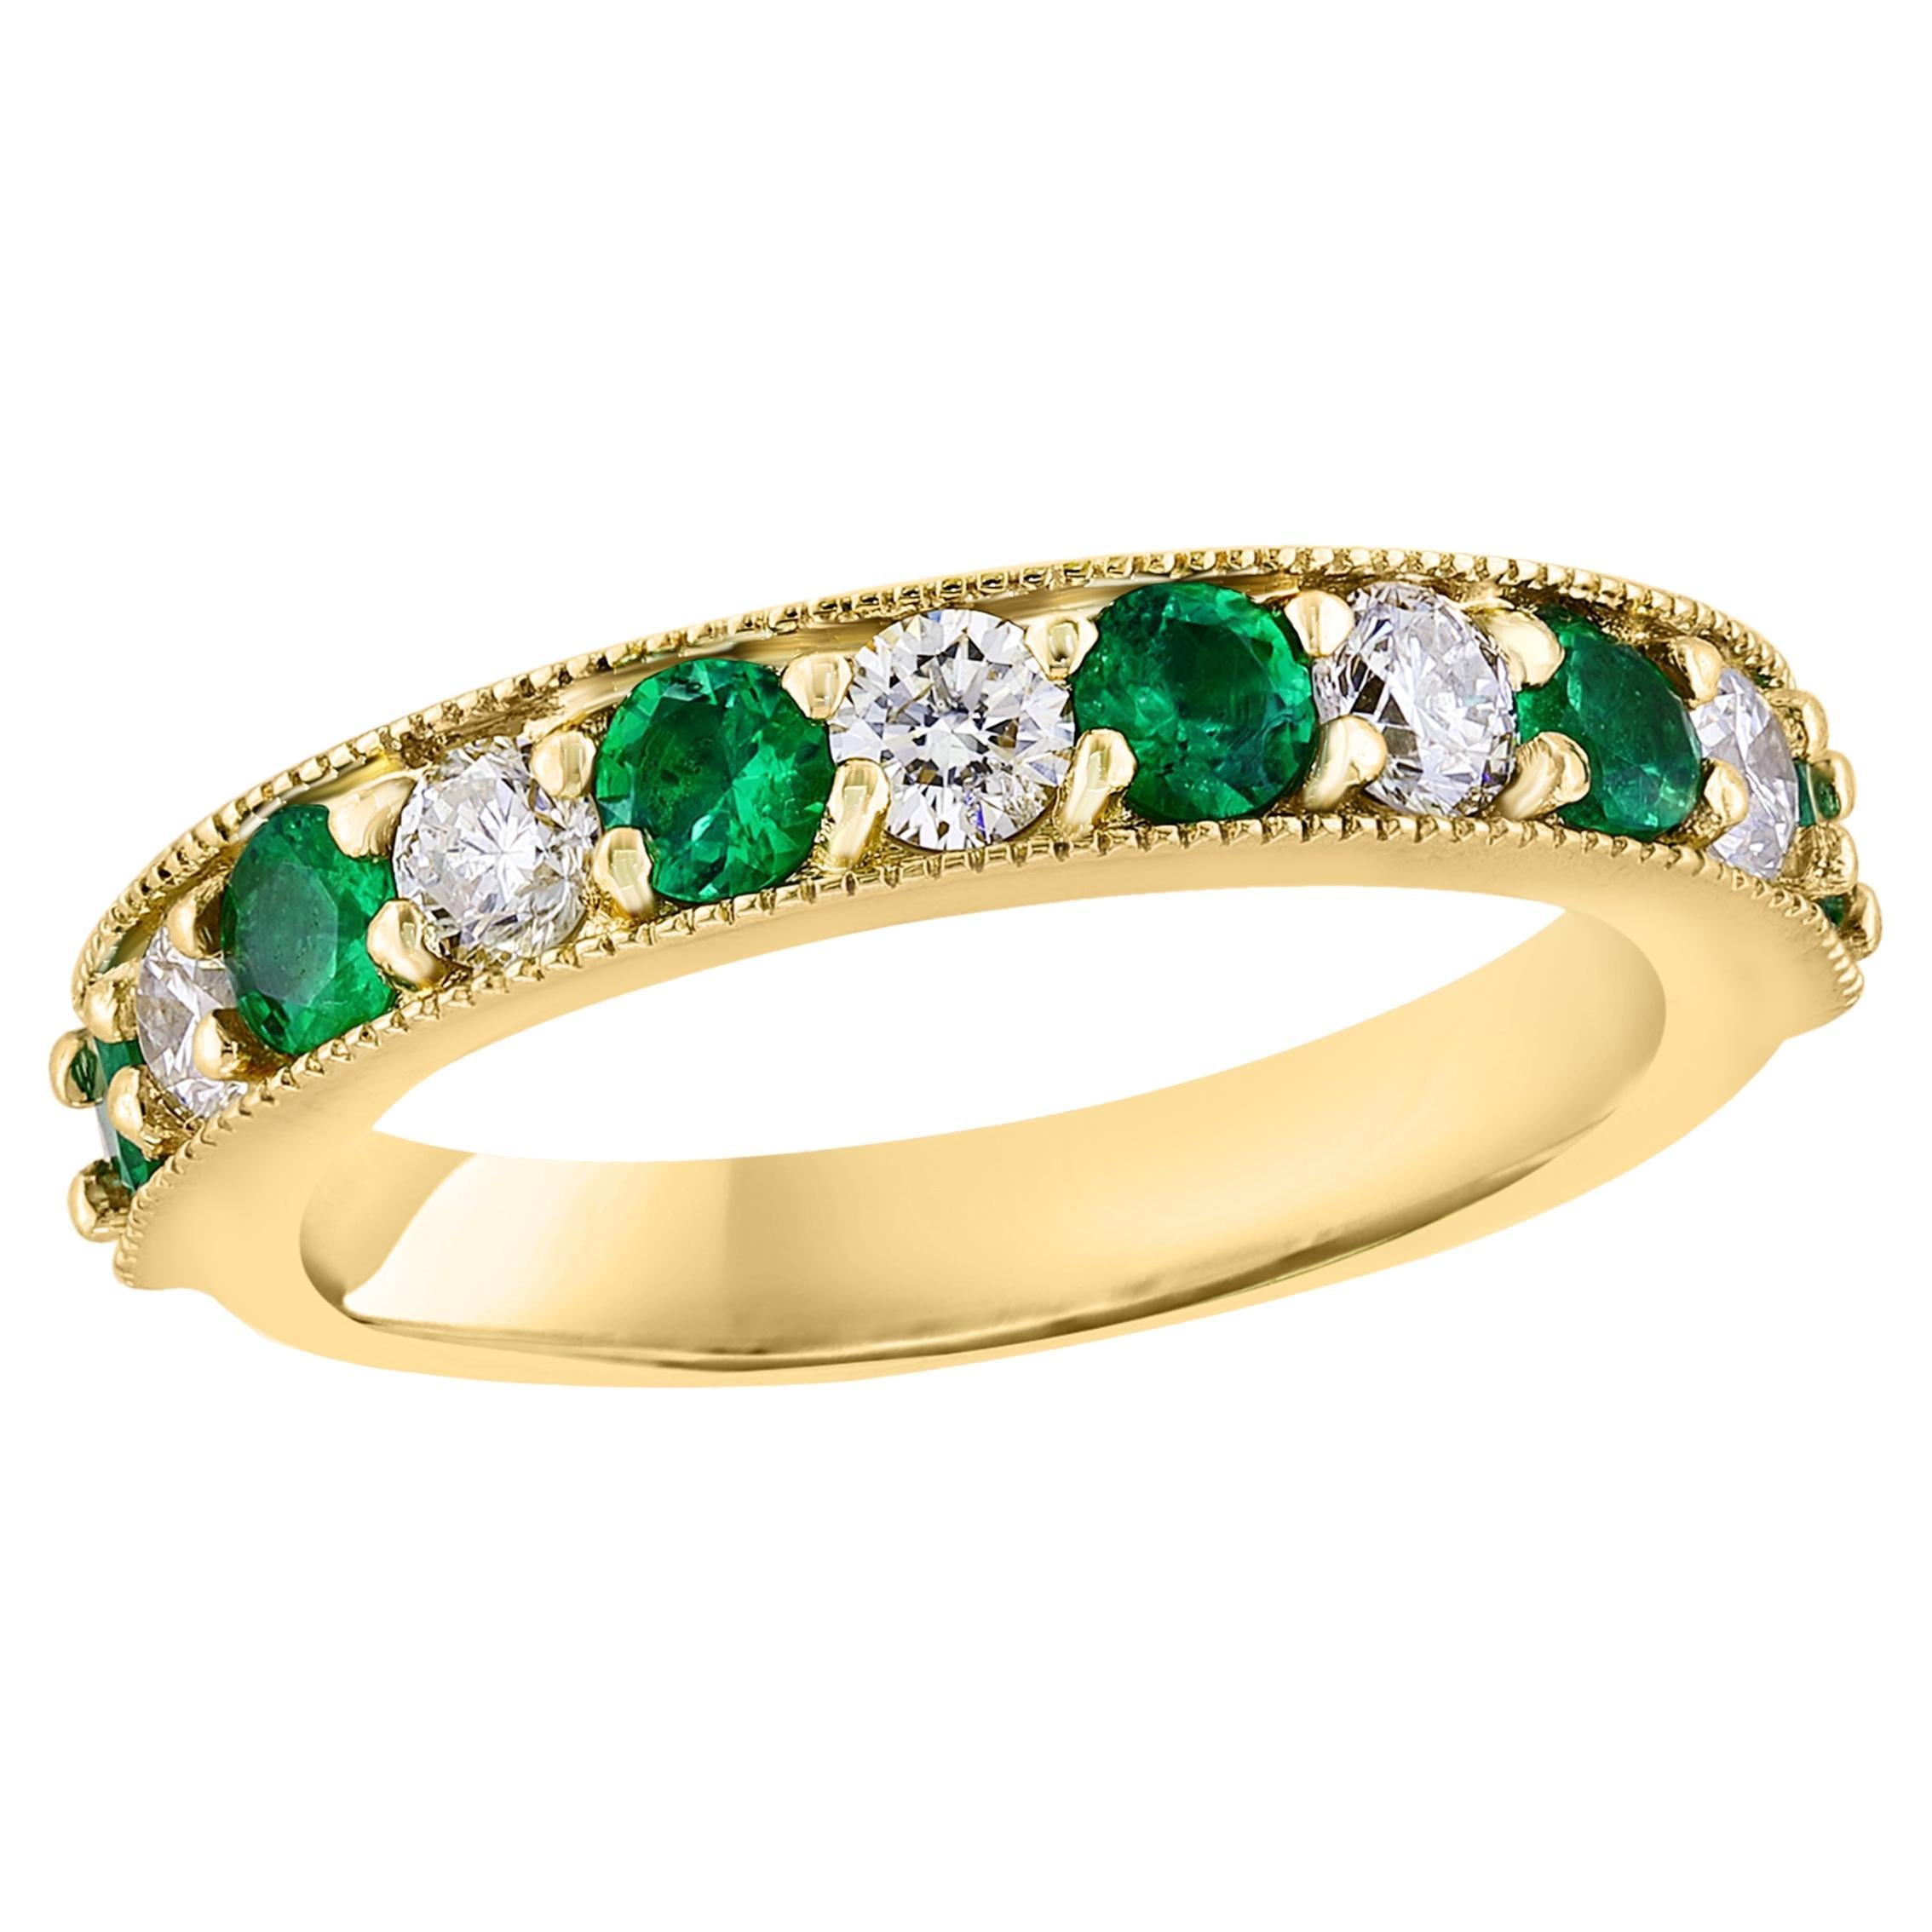 0.55 Carat Brilliant Cut Emerald and Diamond Band in 14K Yellow Gold